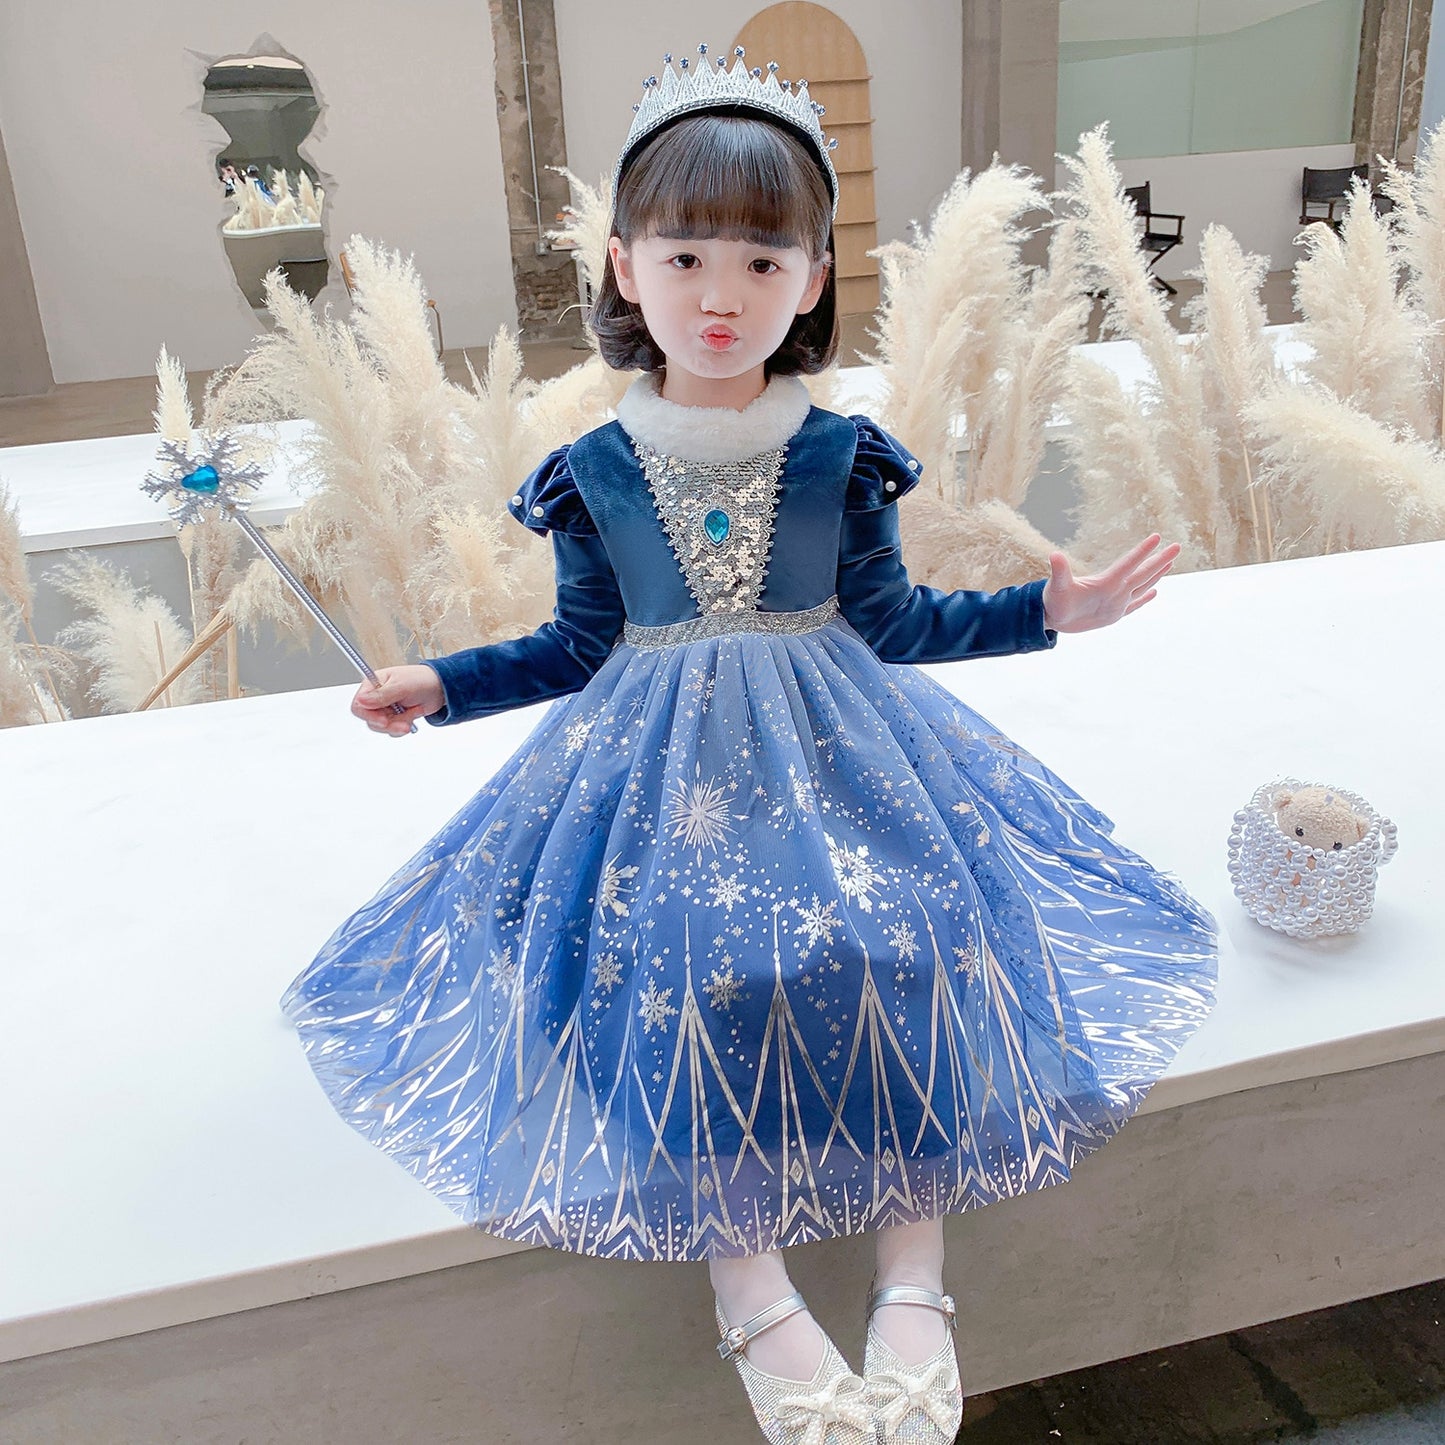 Disney Frozen Elsa Cosplay Dress Girls Winter Birthday Princess Dress